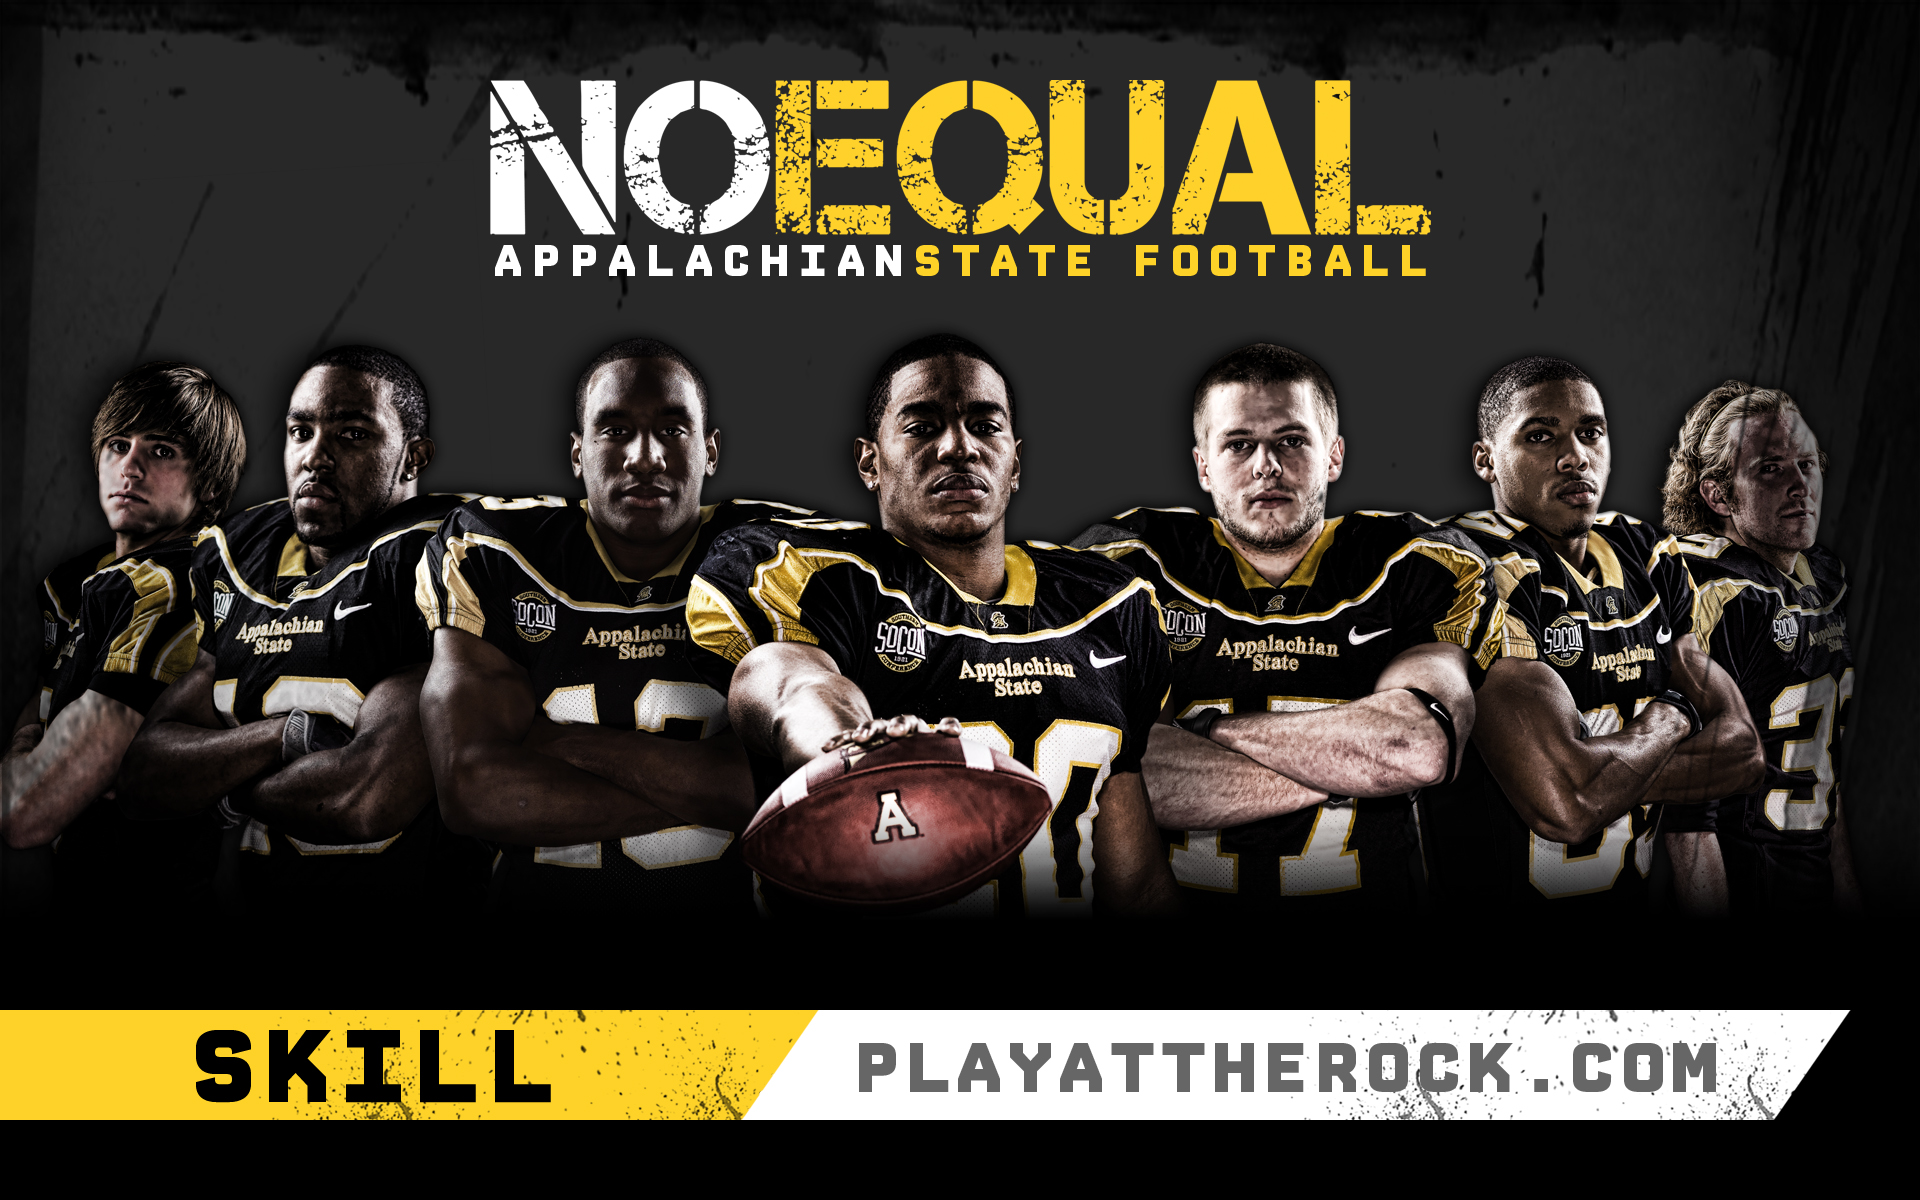 Appalachian State University Play At The Rock